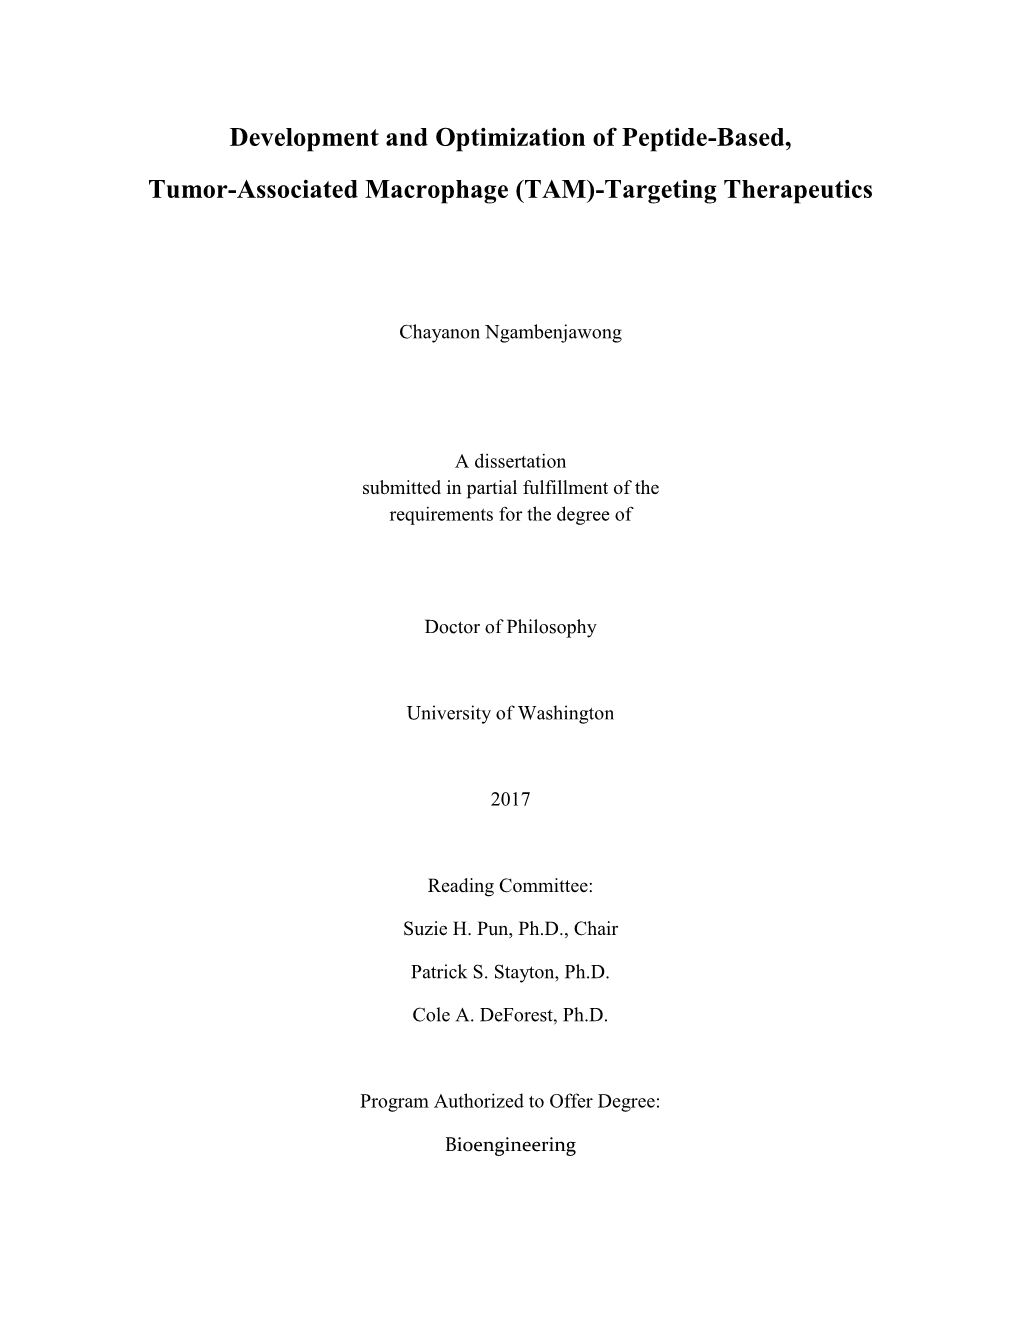 Development and Optimization of Peptide-Based, Tumor-Associated Macrophage (TAM)-Targeting Therapeutics